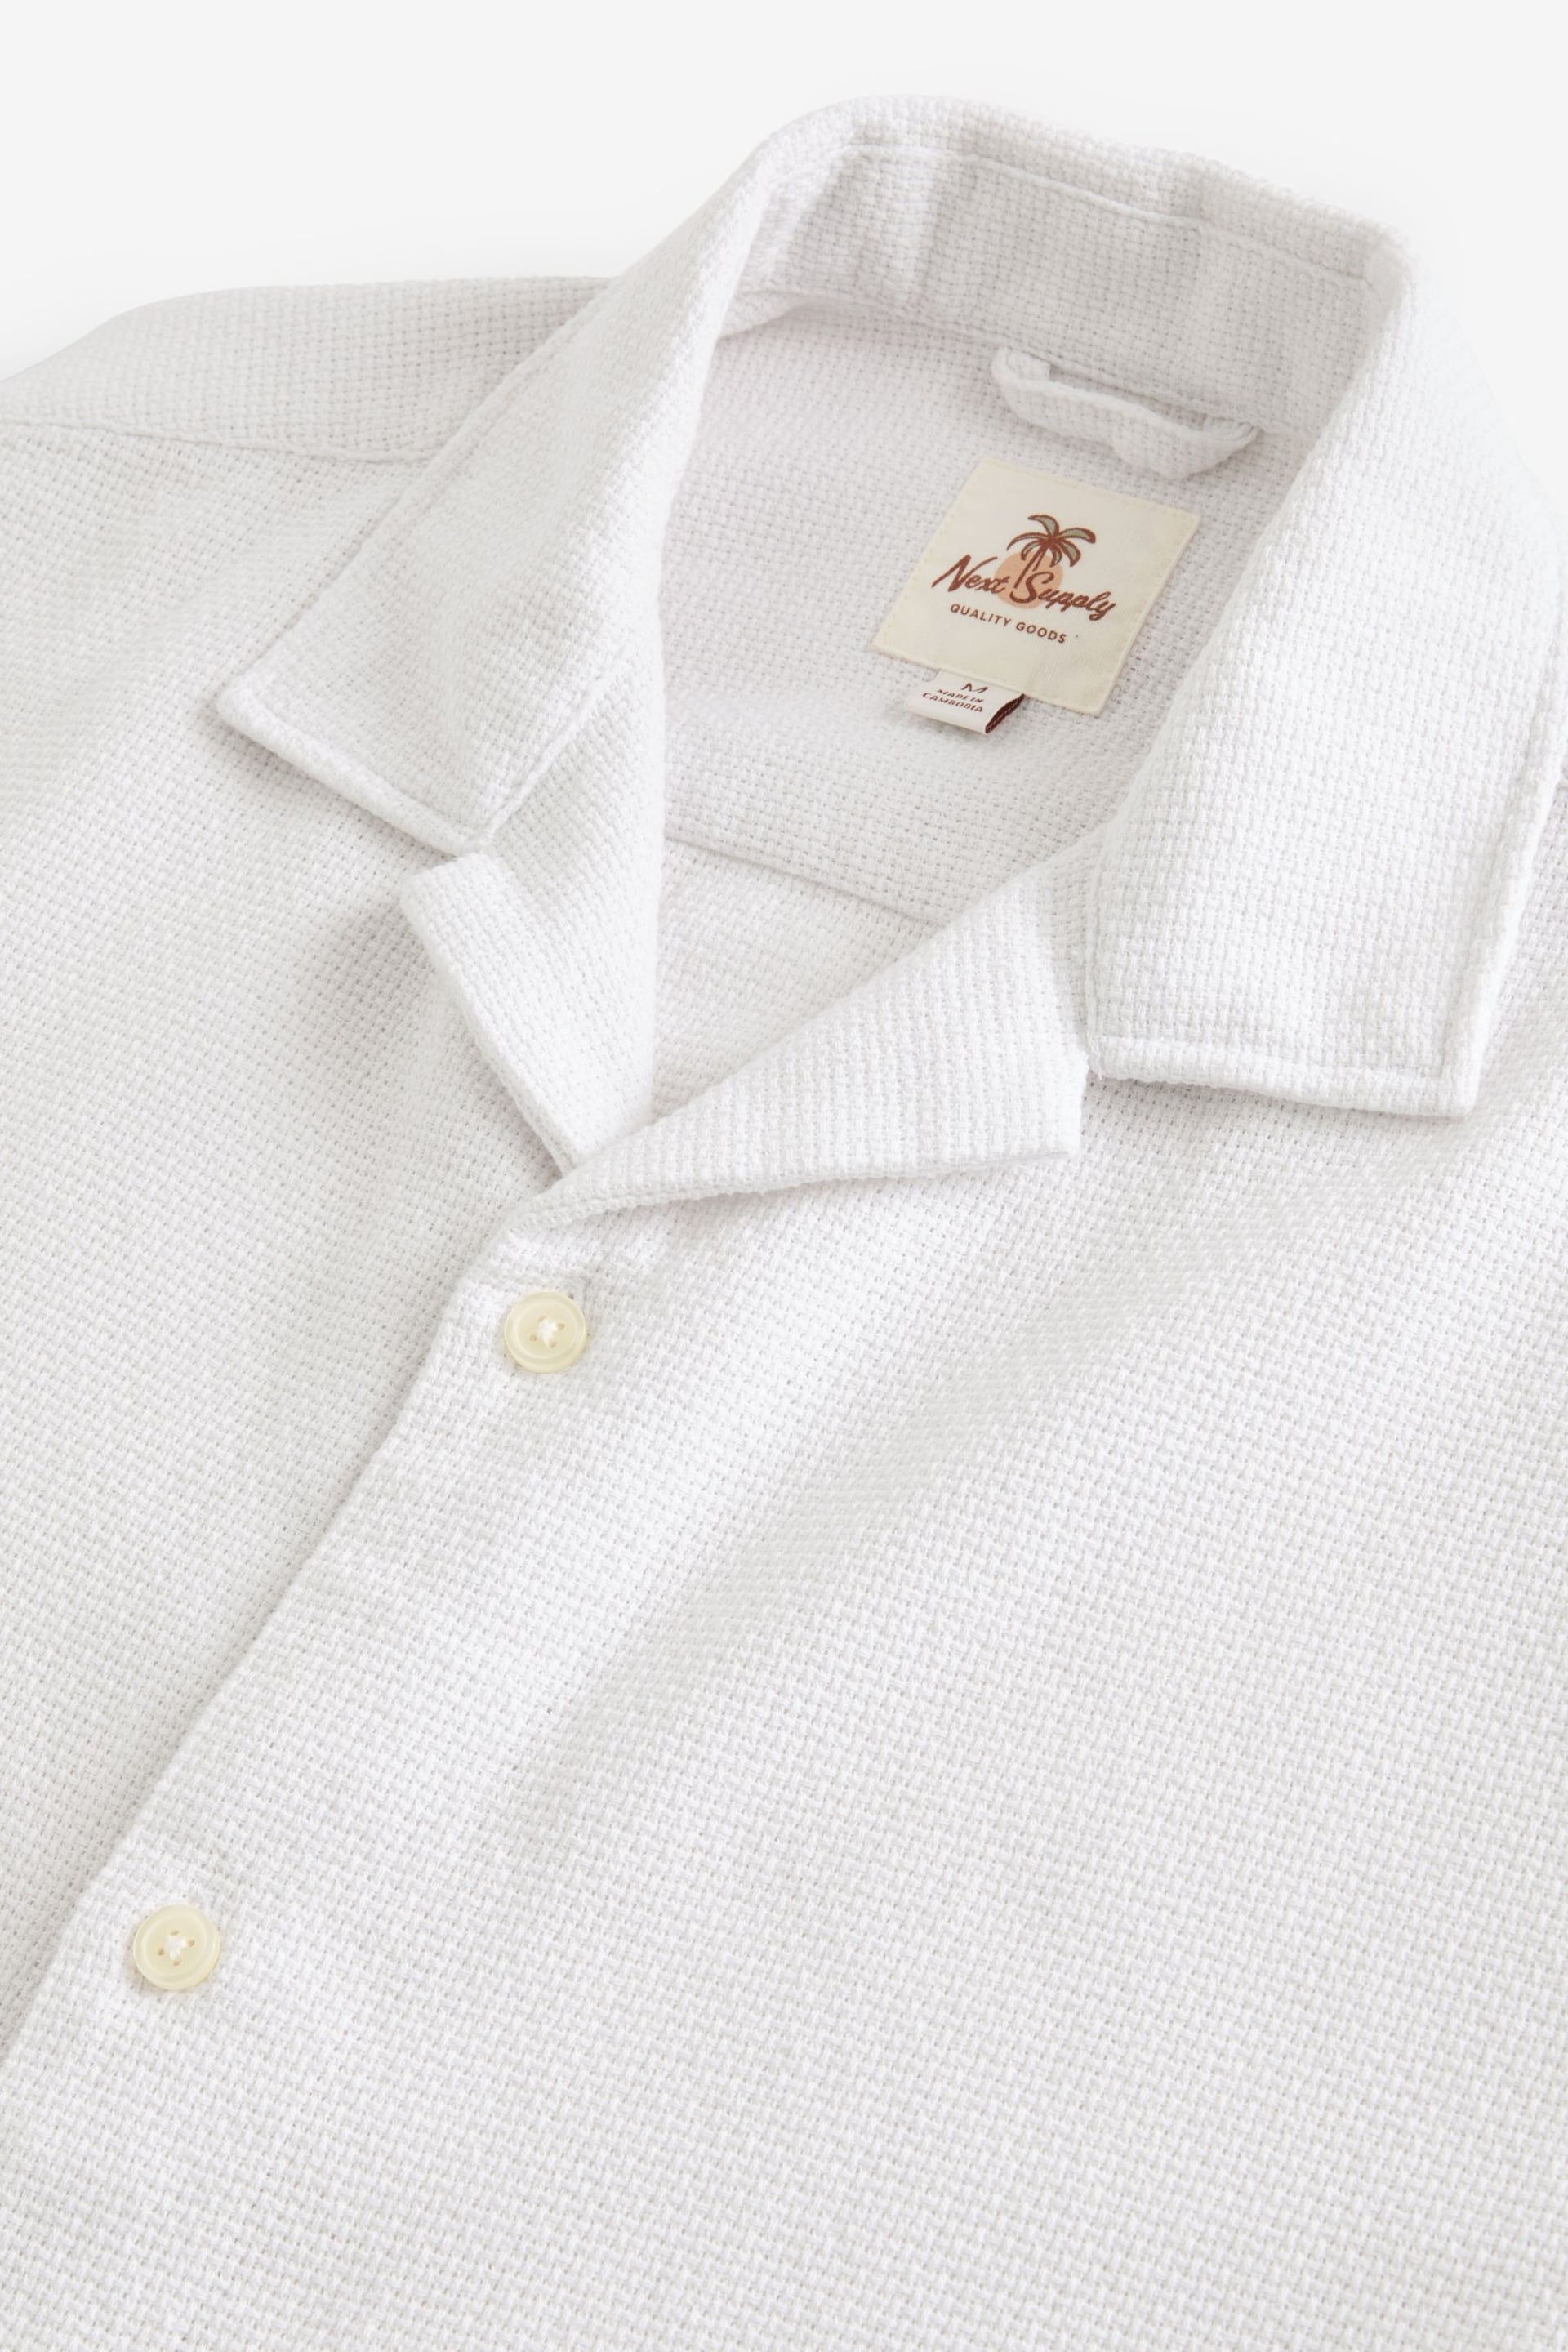 White Textured Short Sleeve Cuban Collar Shirt - Image 7 of 8